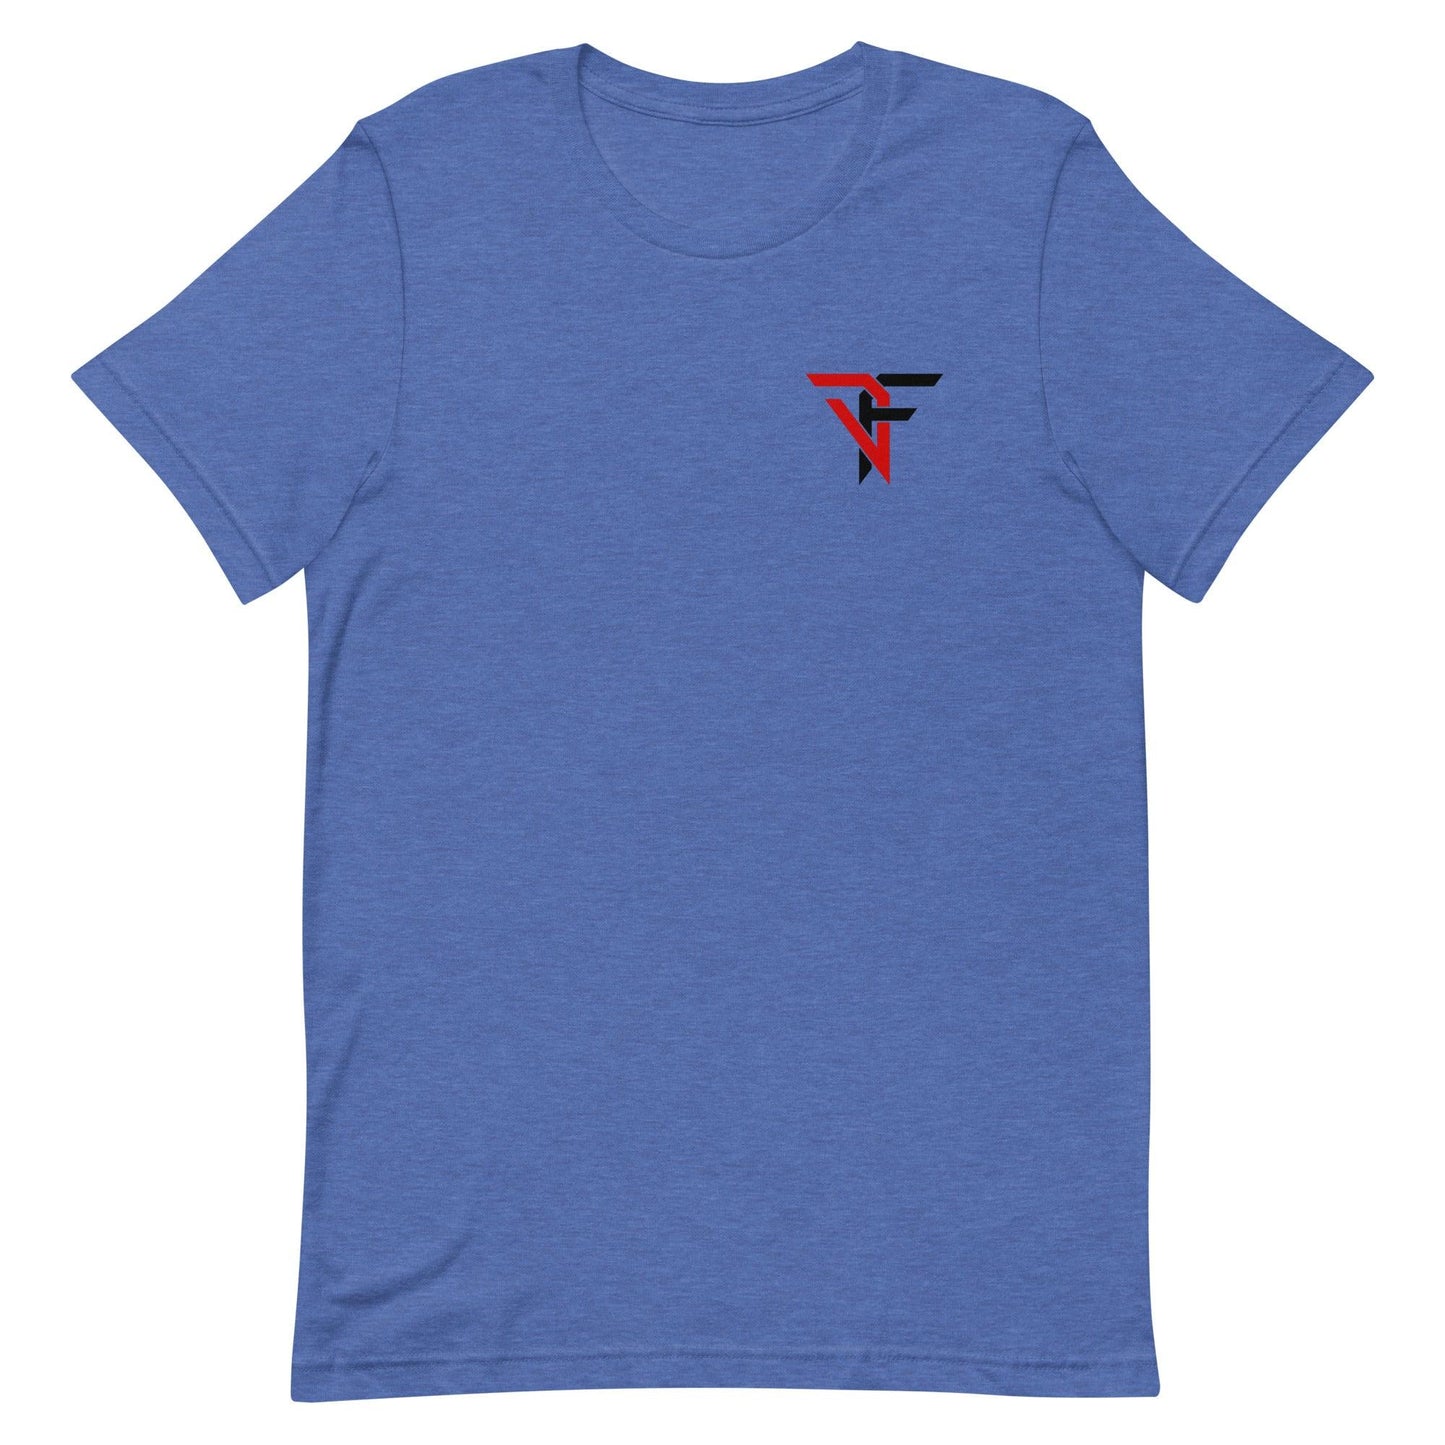 Daemon Fagan "Essential" t-shirt - Fan Arch